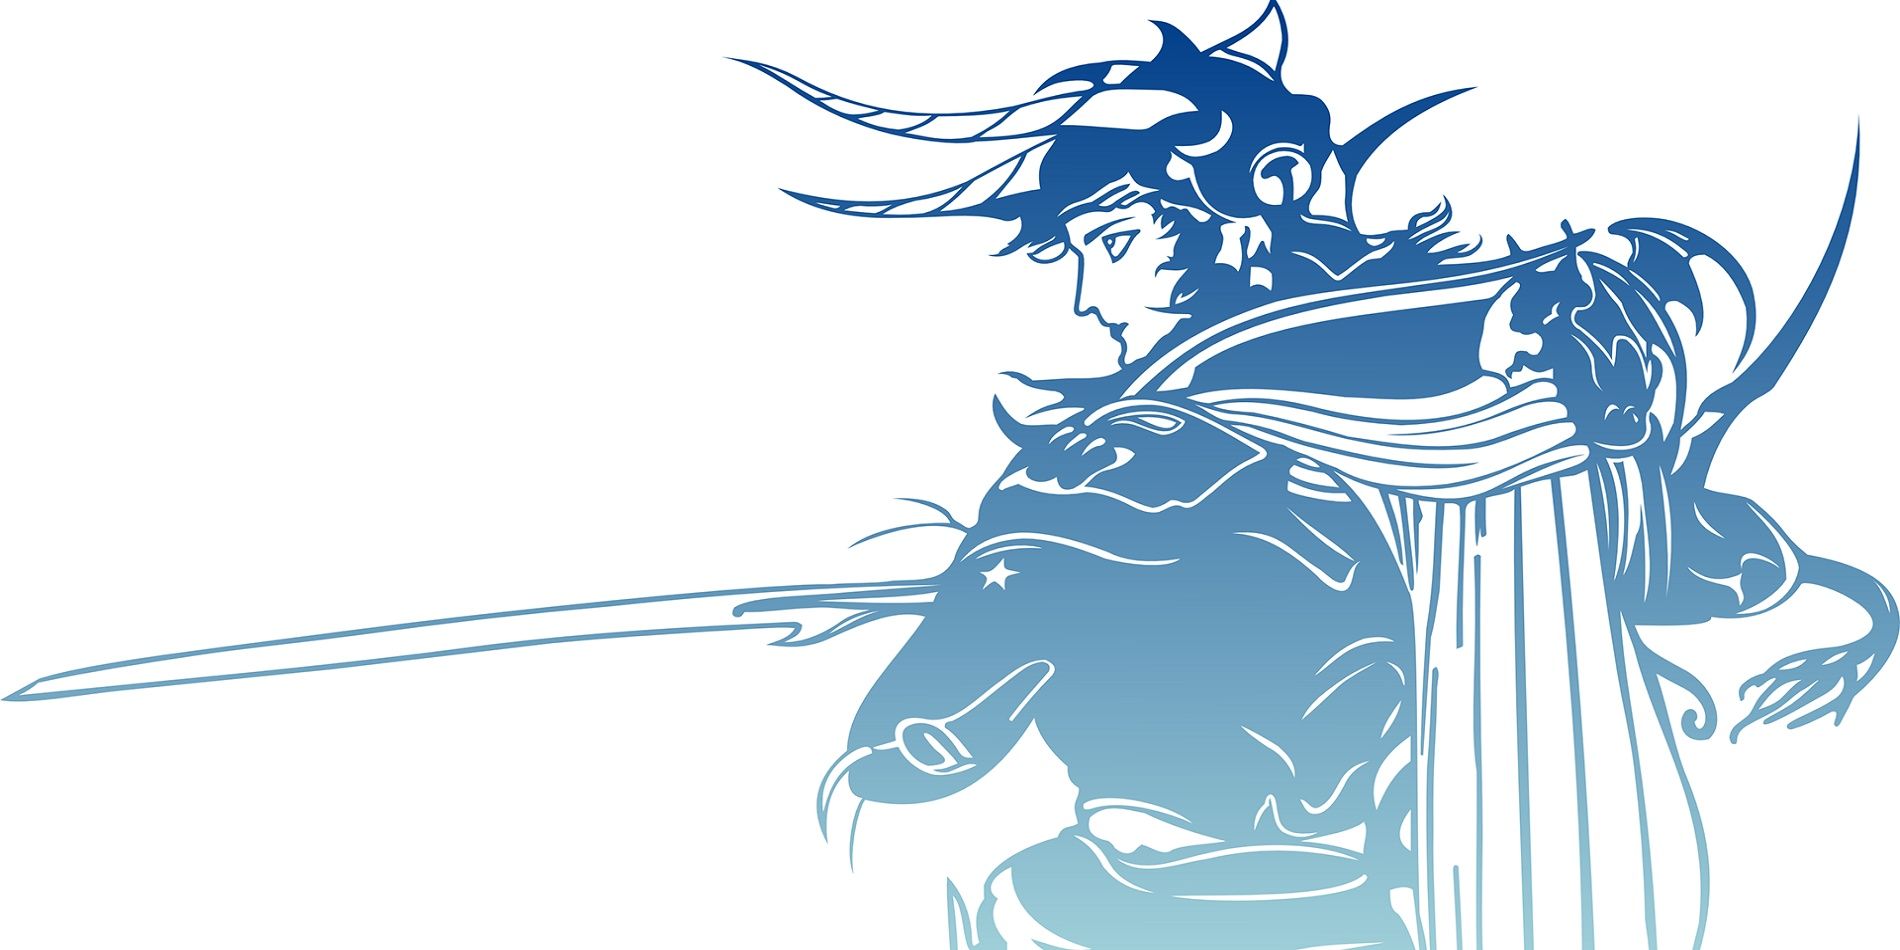 A swordswoman from the original Final Fantasy cover art